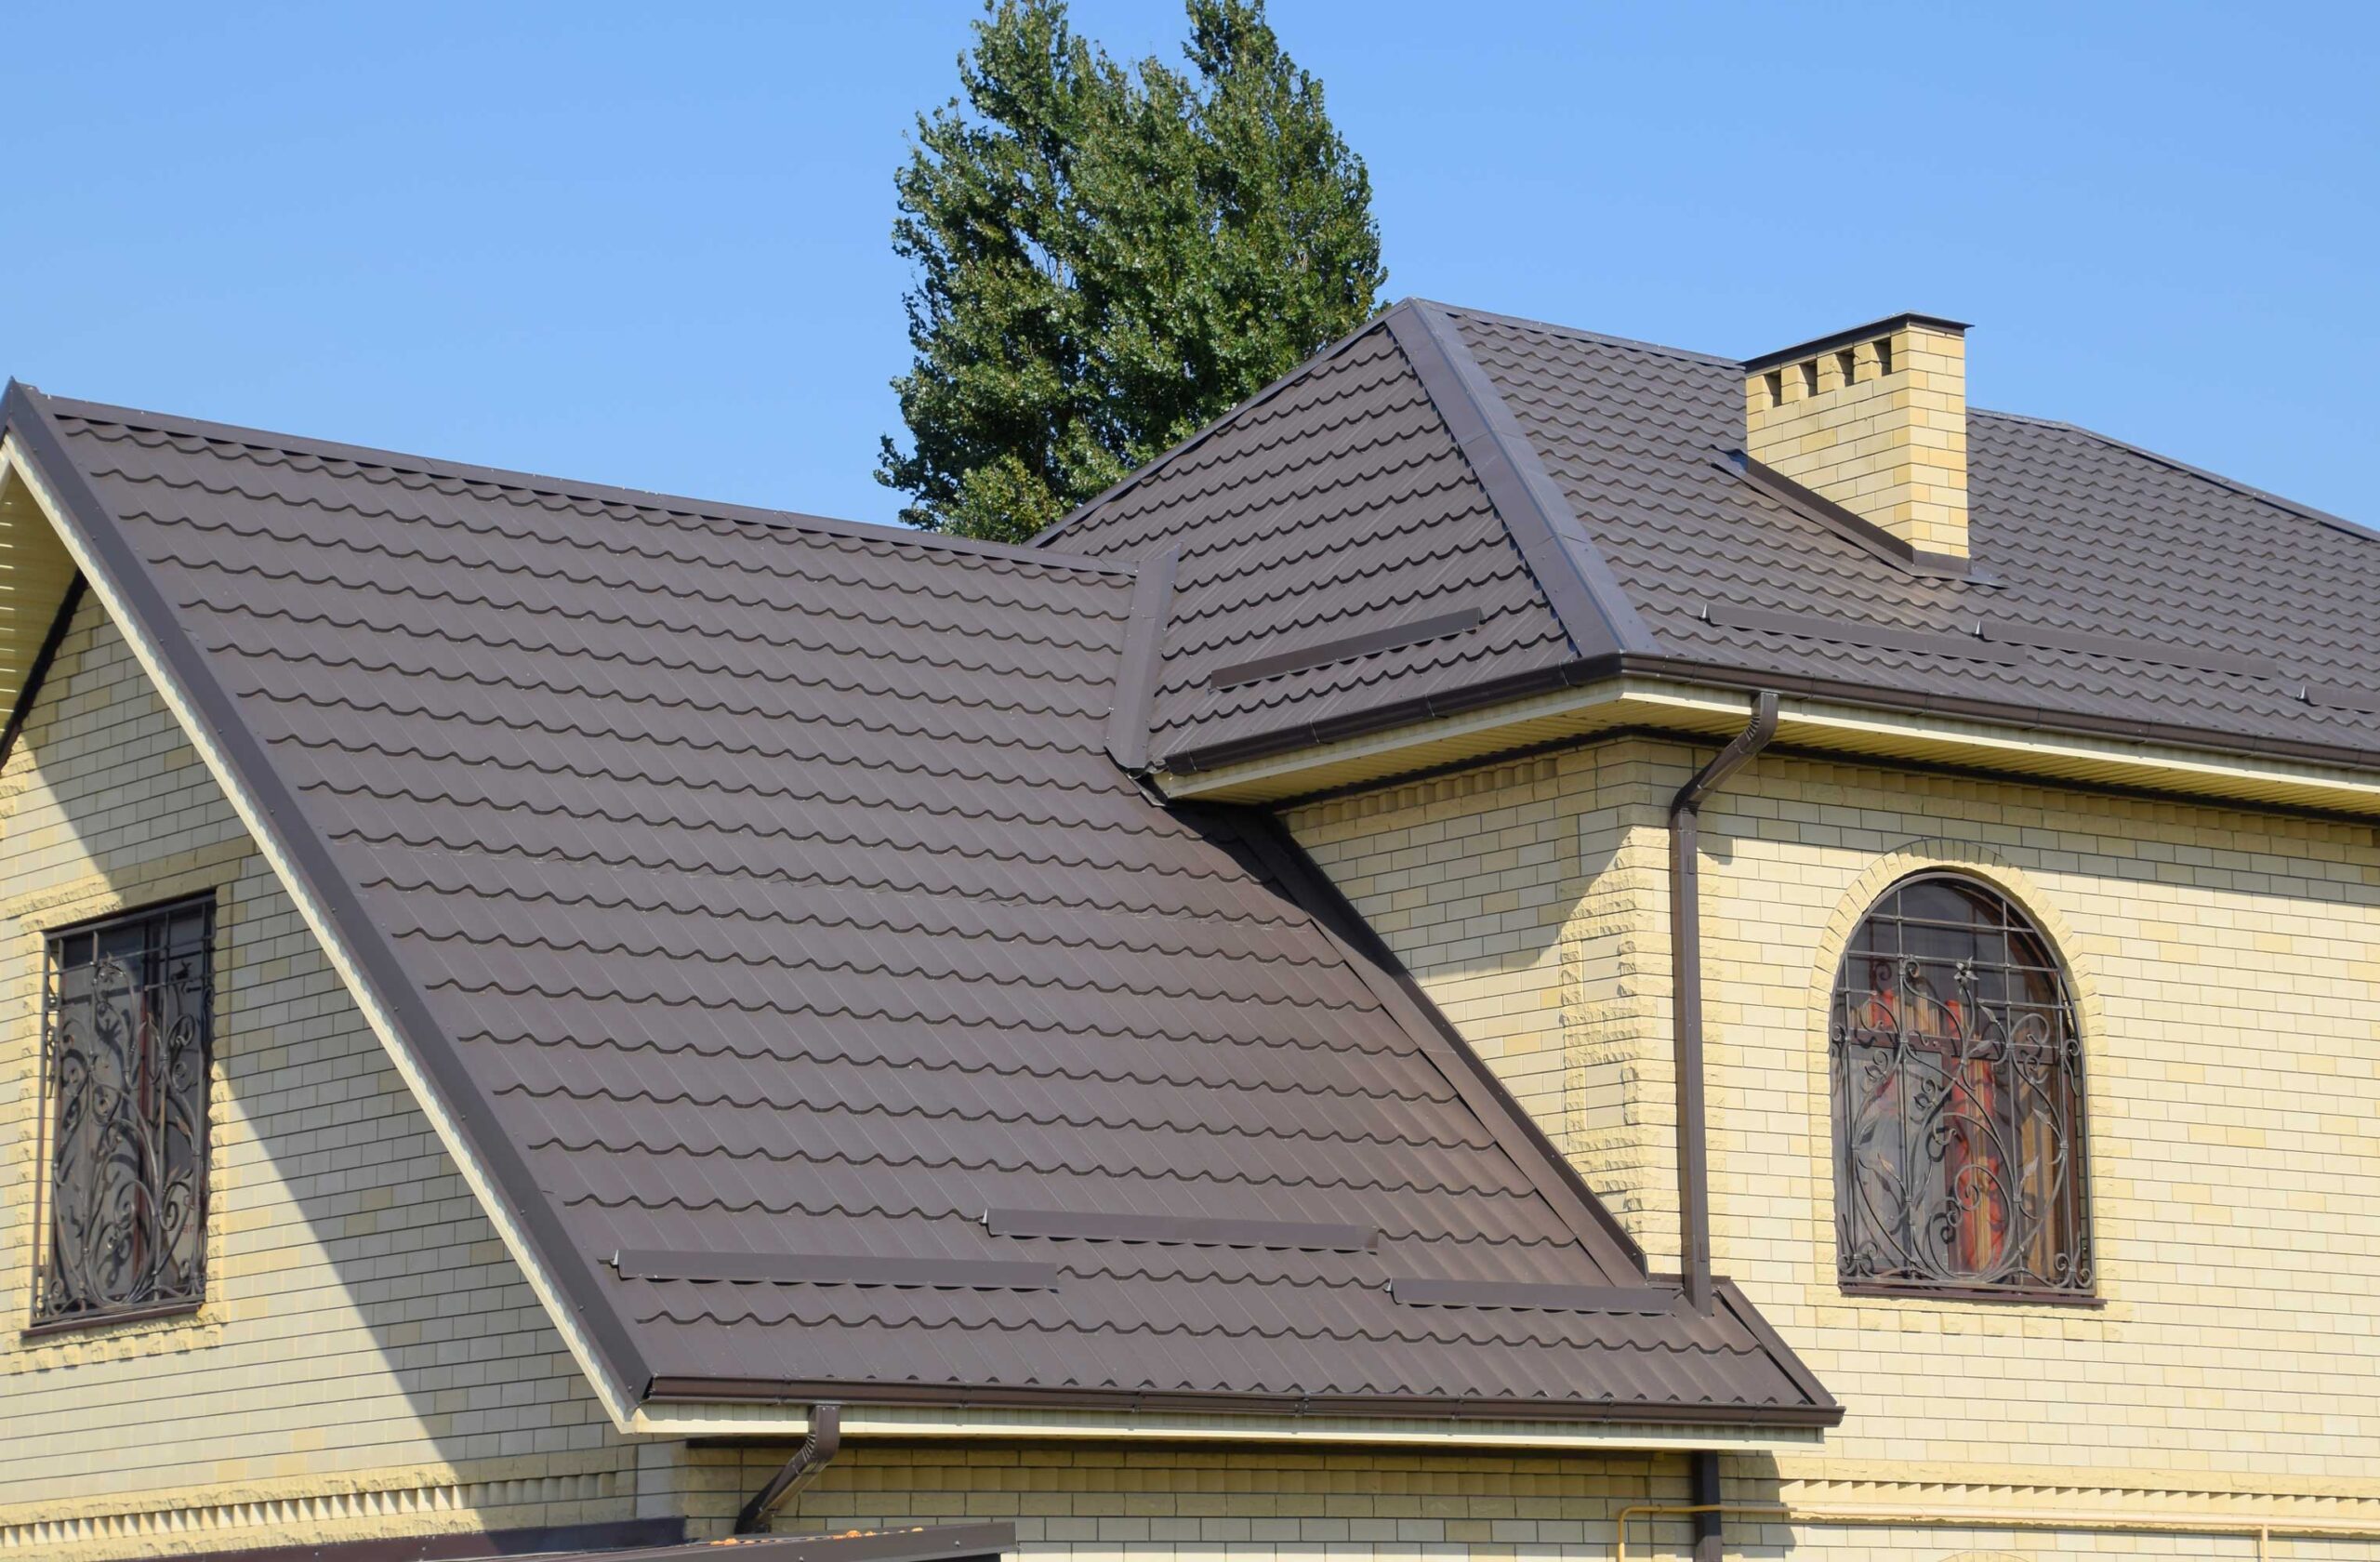 popular roof styles, popular roof materials, best roof materials